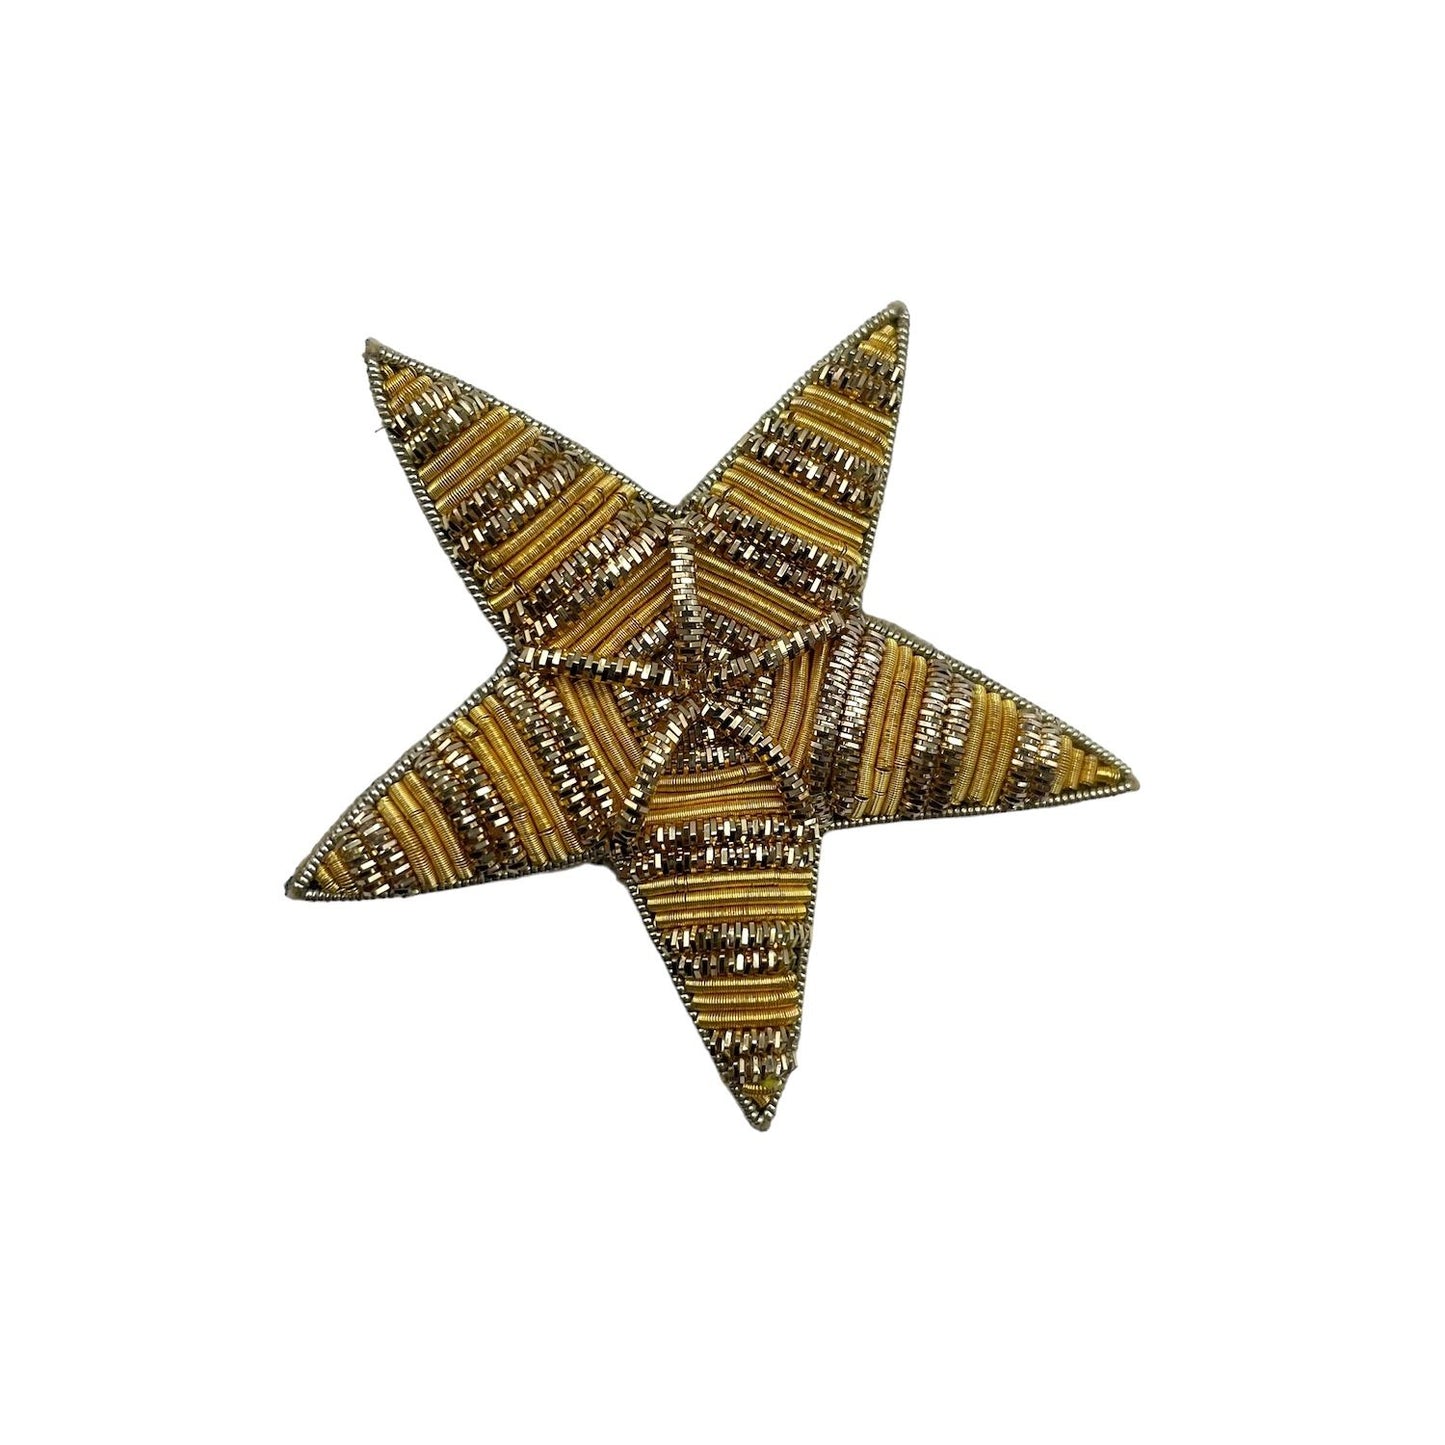 Gold star pin